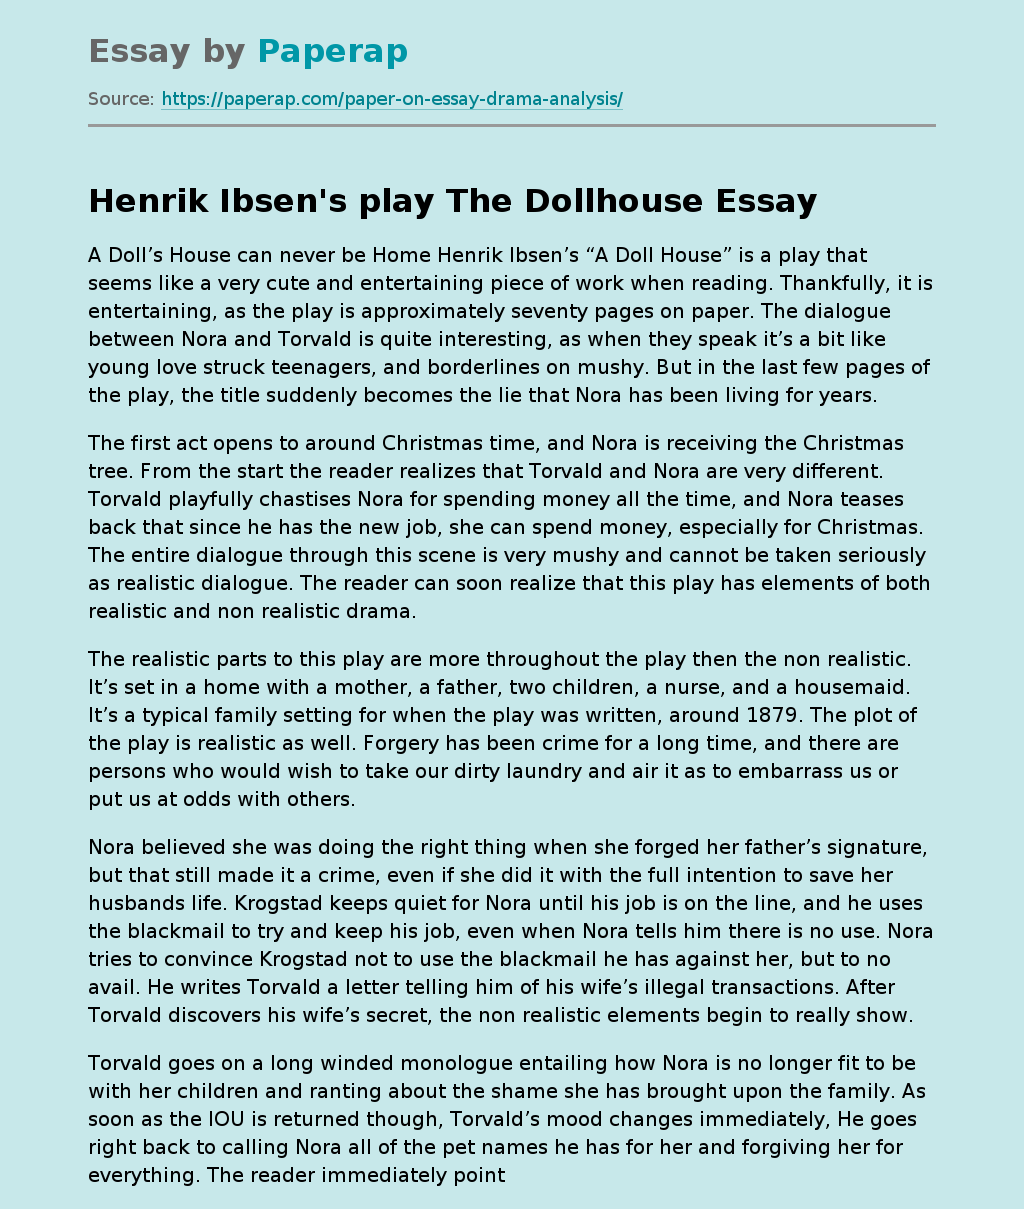 Henrik Ibsen's play The Dollhouse